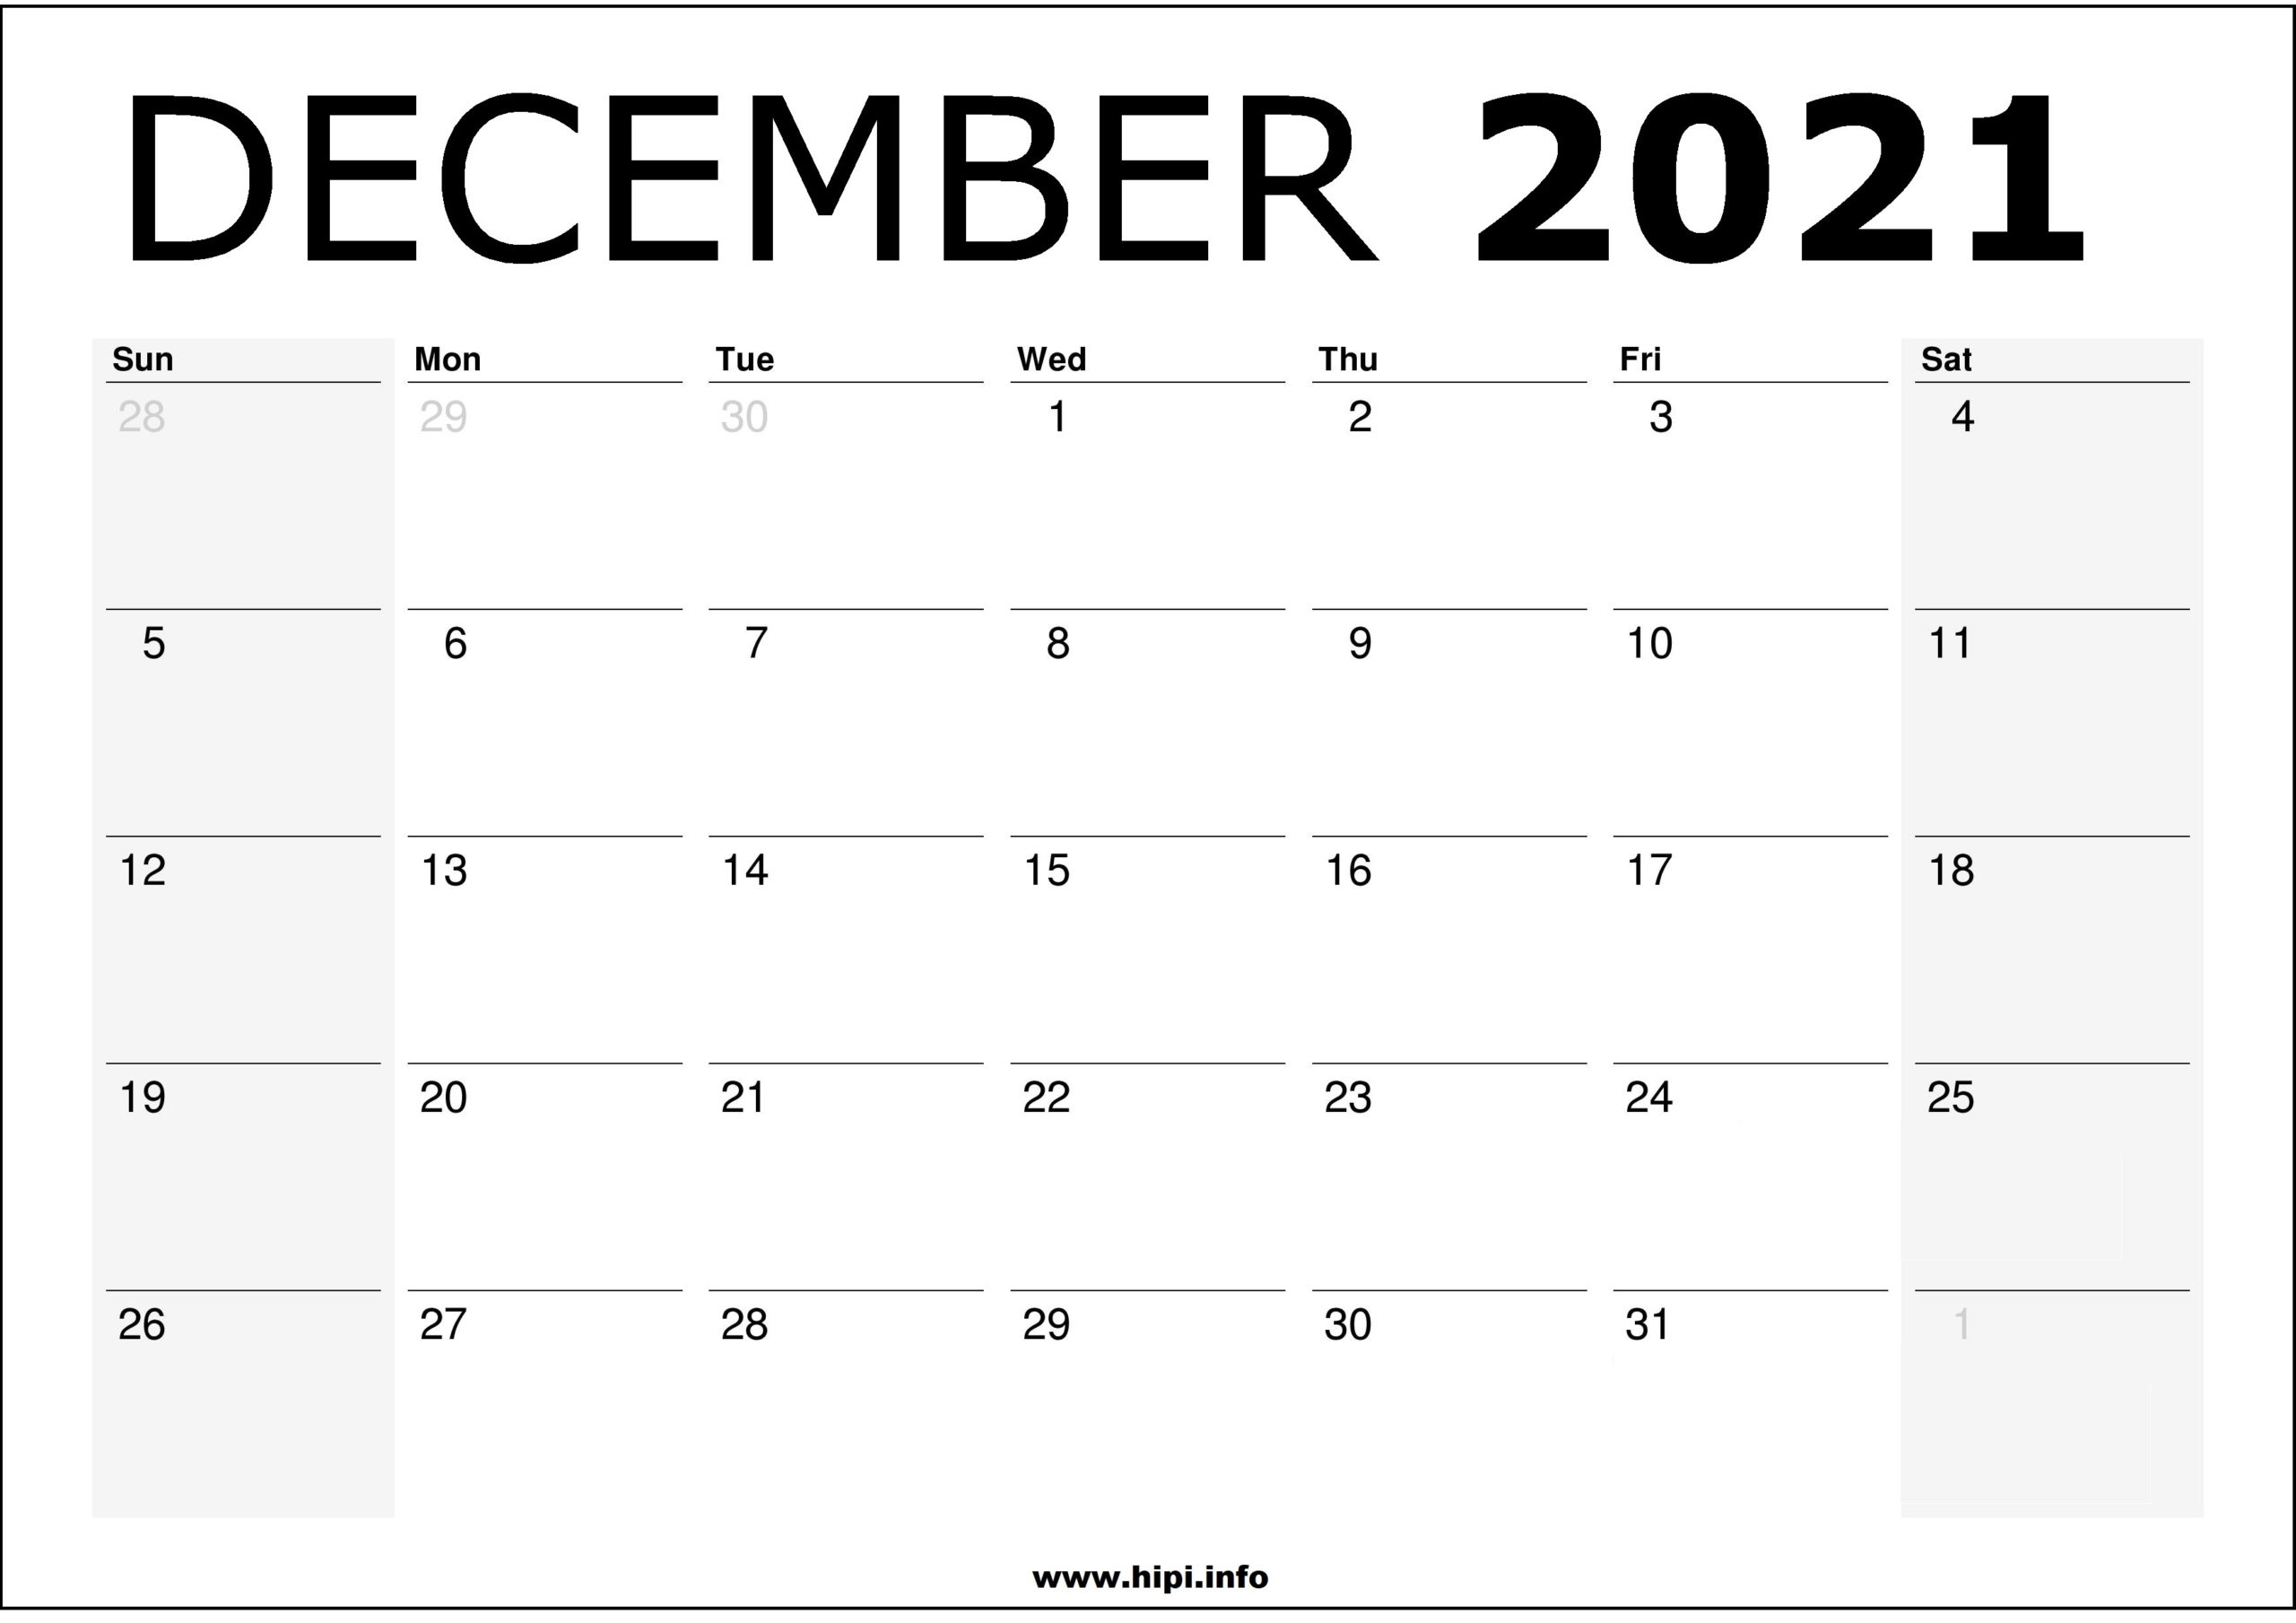 December 2021 Calendar Printable - Monthly Calendar Free